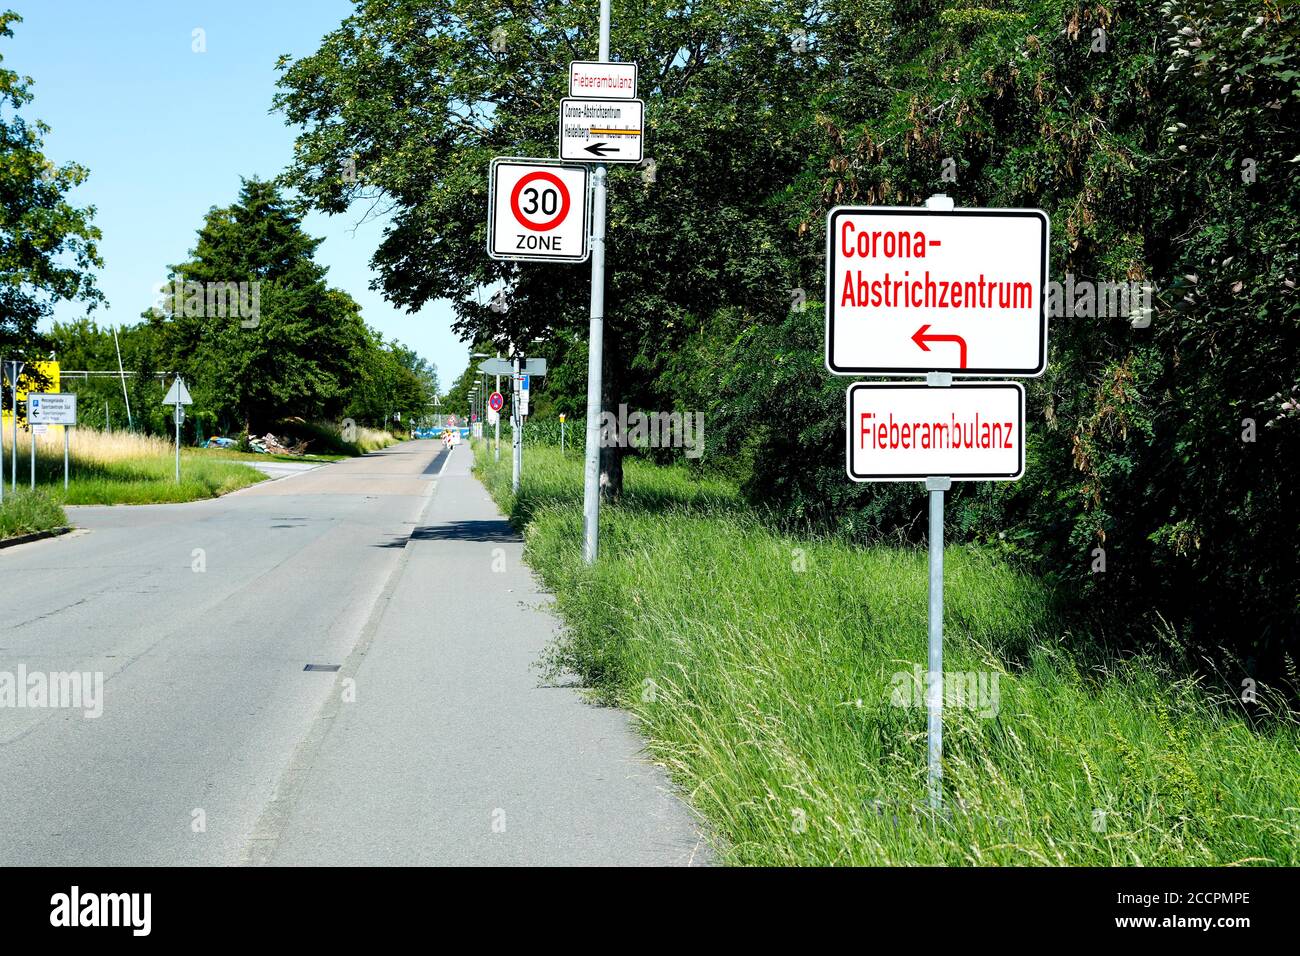 Heidelberg/Bavaria, Germany - June 24, 2020: Corona / Covid19 Drive In sign. Showing the way to the test station at Heidelberg-Kirchheim (Germany). Stock Photo